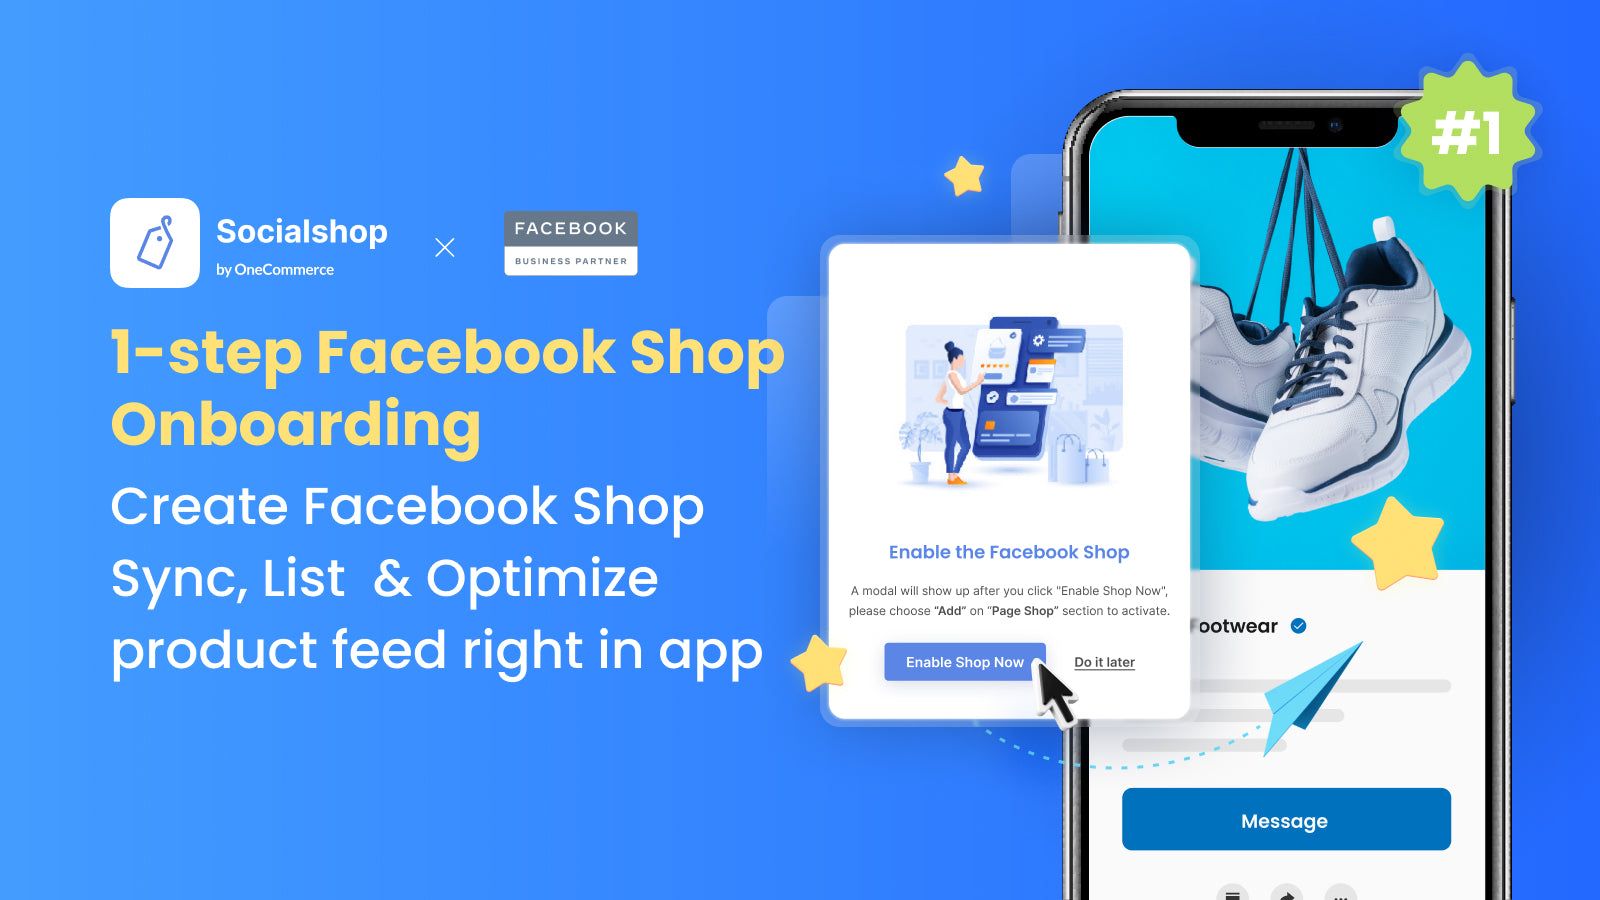 Create Facebook Shop in 1 click